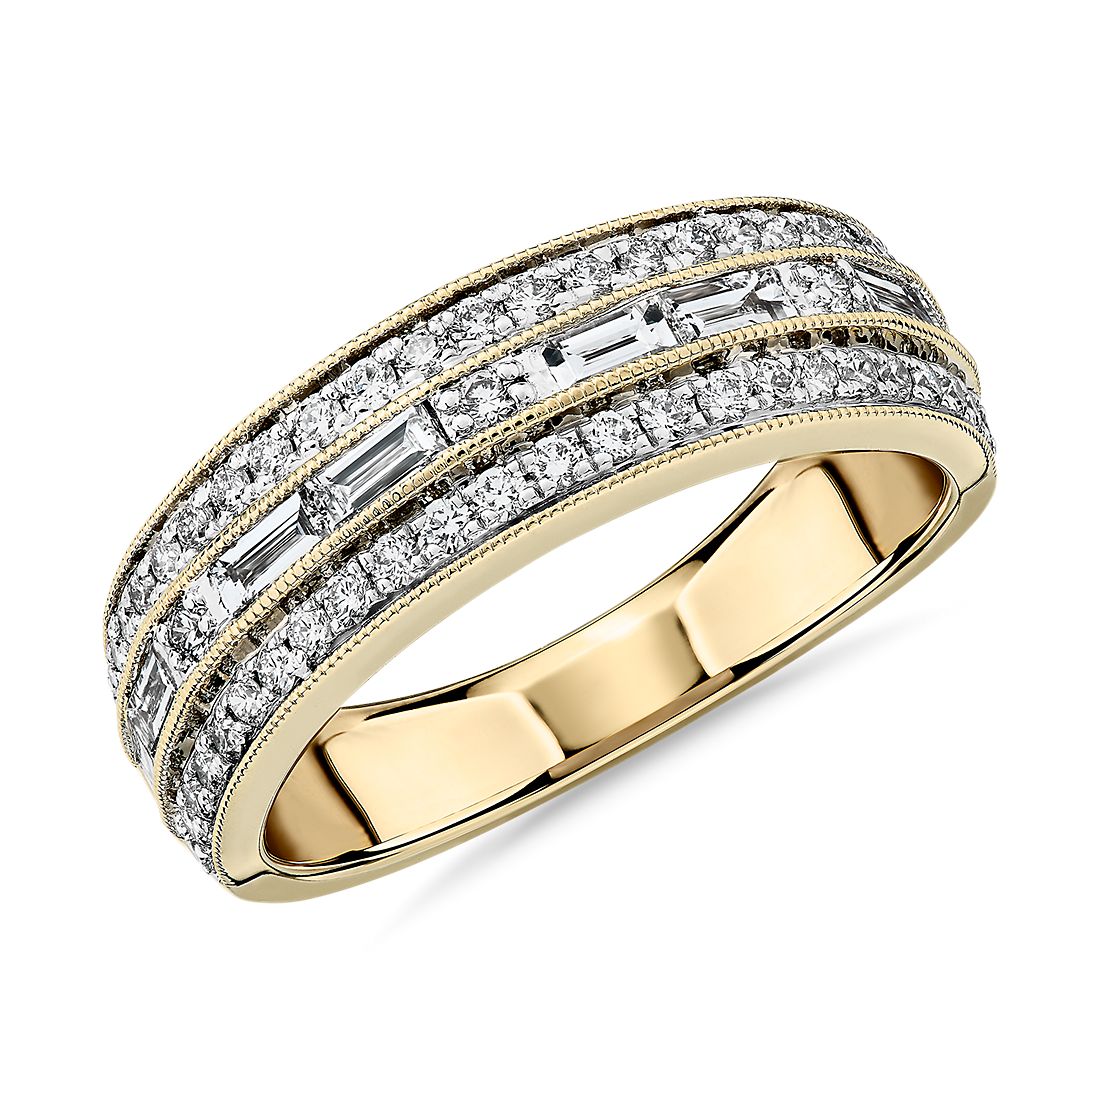 ZAC ZAC POSEN Triple Row East-West Baguette & Pavé Diamond Wedding Ring in 14k Yellow Gold (6 mm, 3/4 ct. tw.)